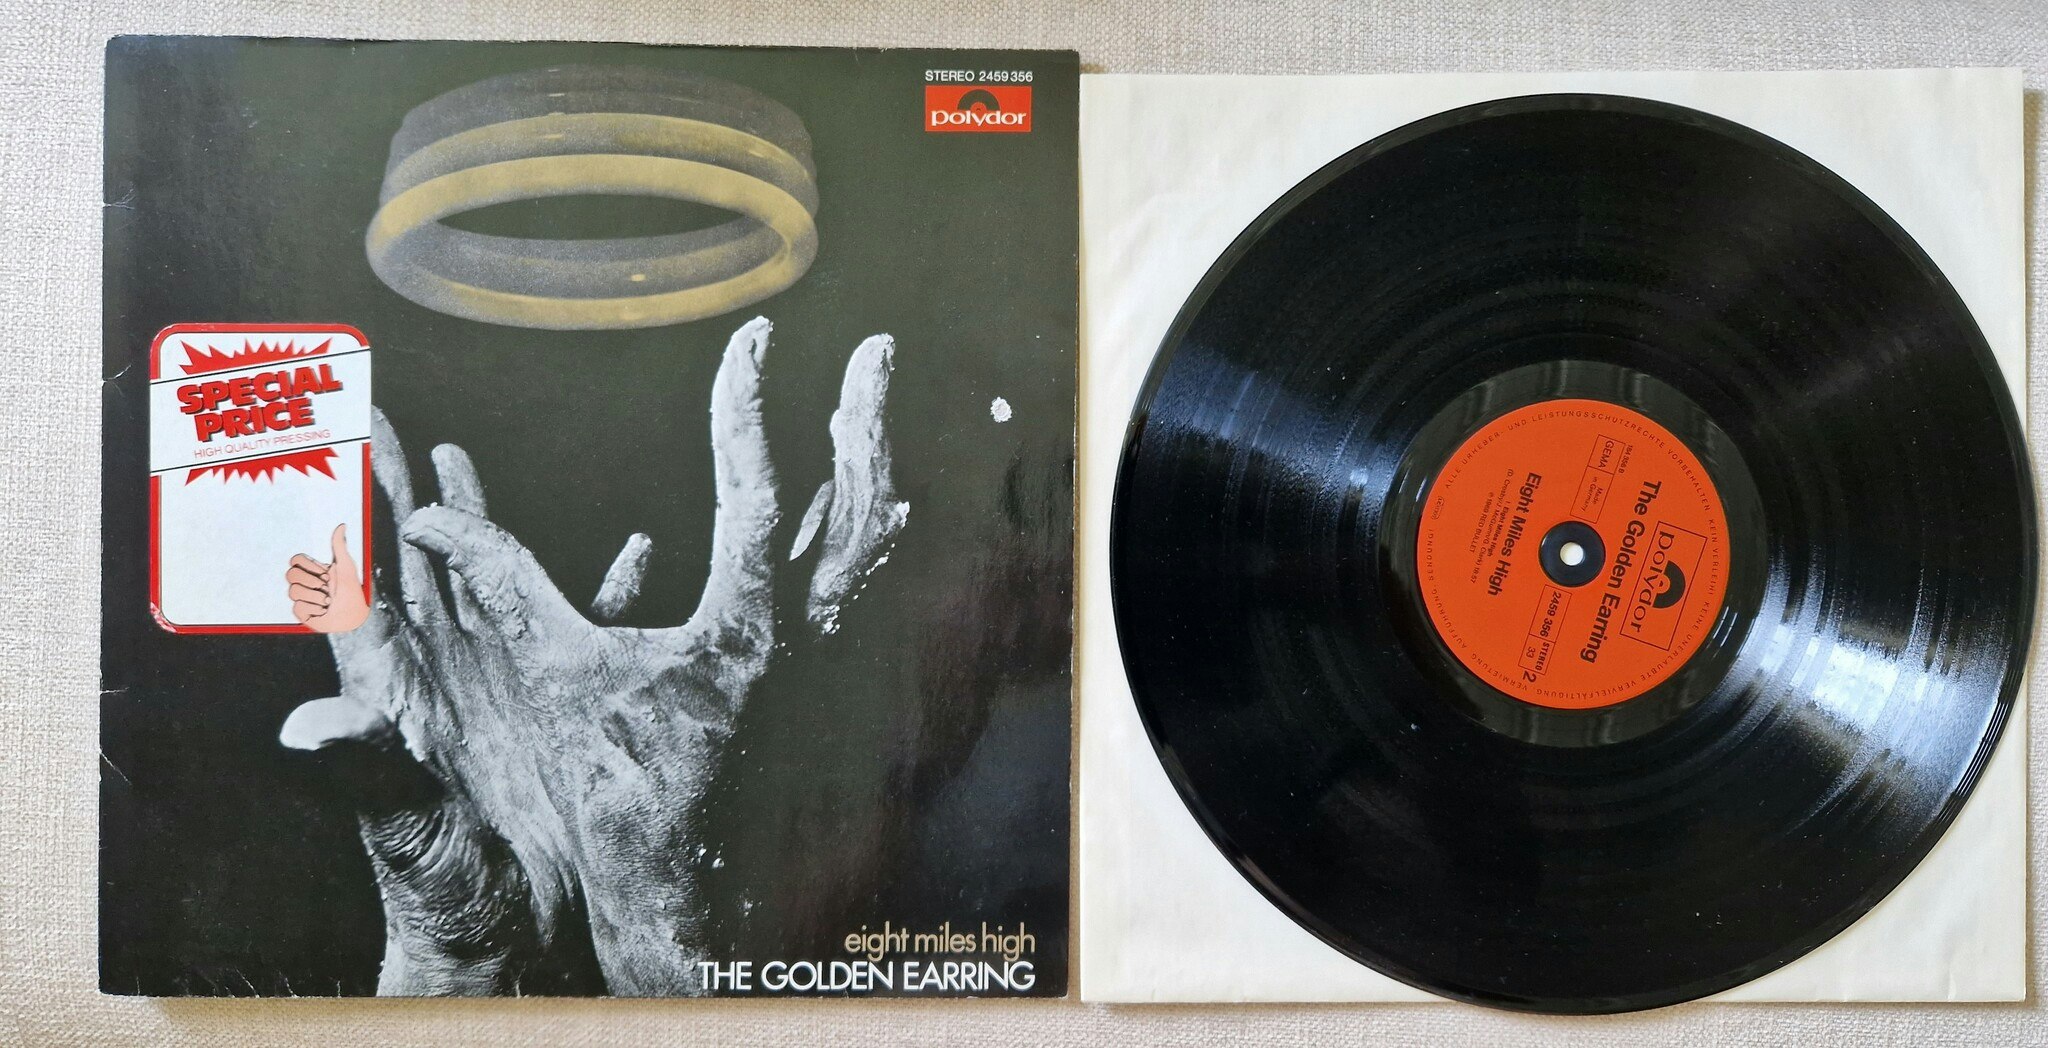 Golden Earring, Eight miles high. Vinyl LP